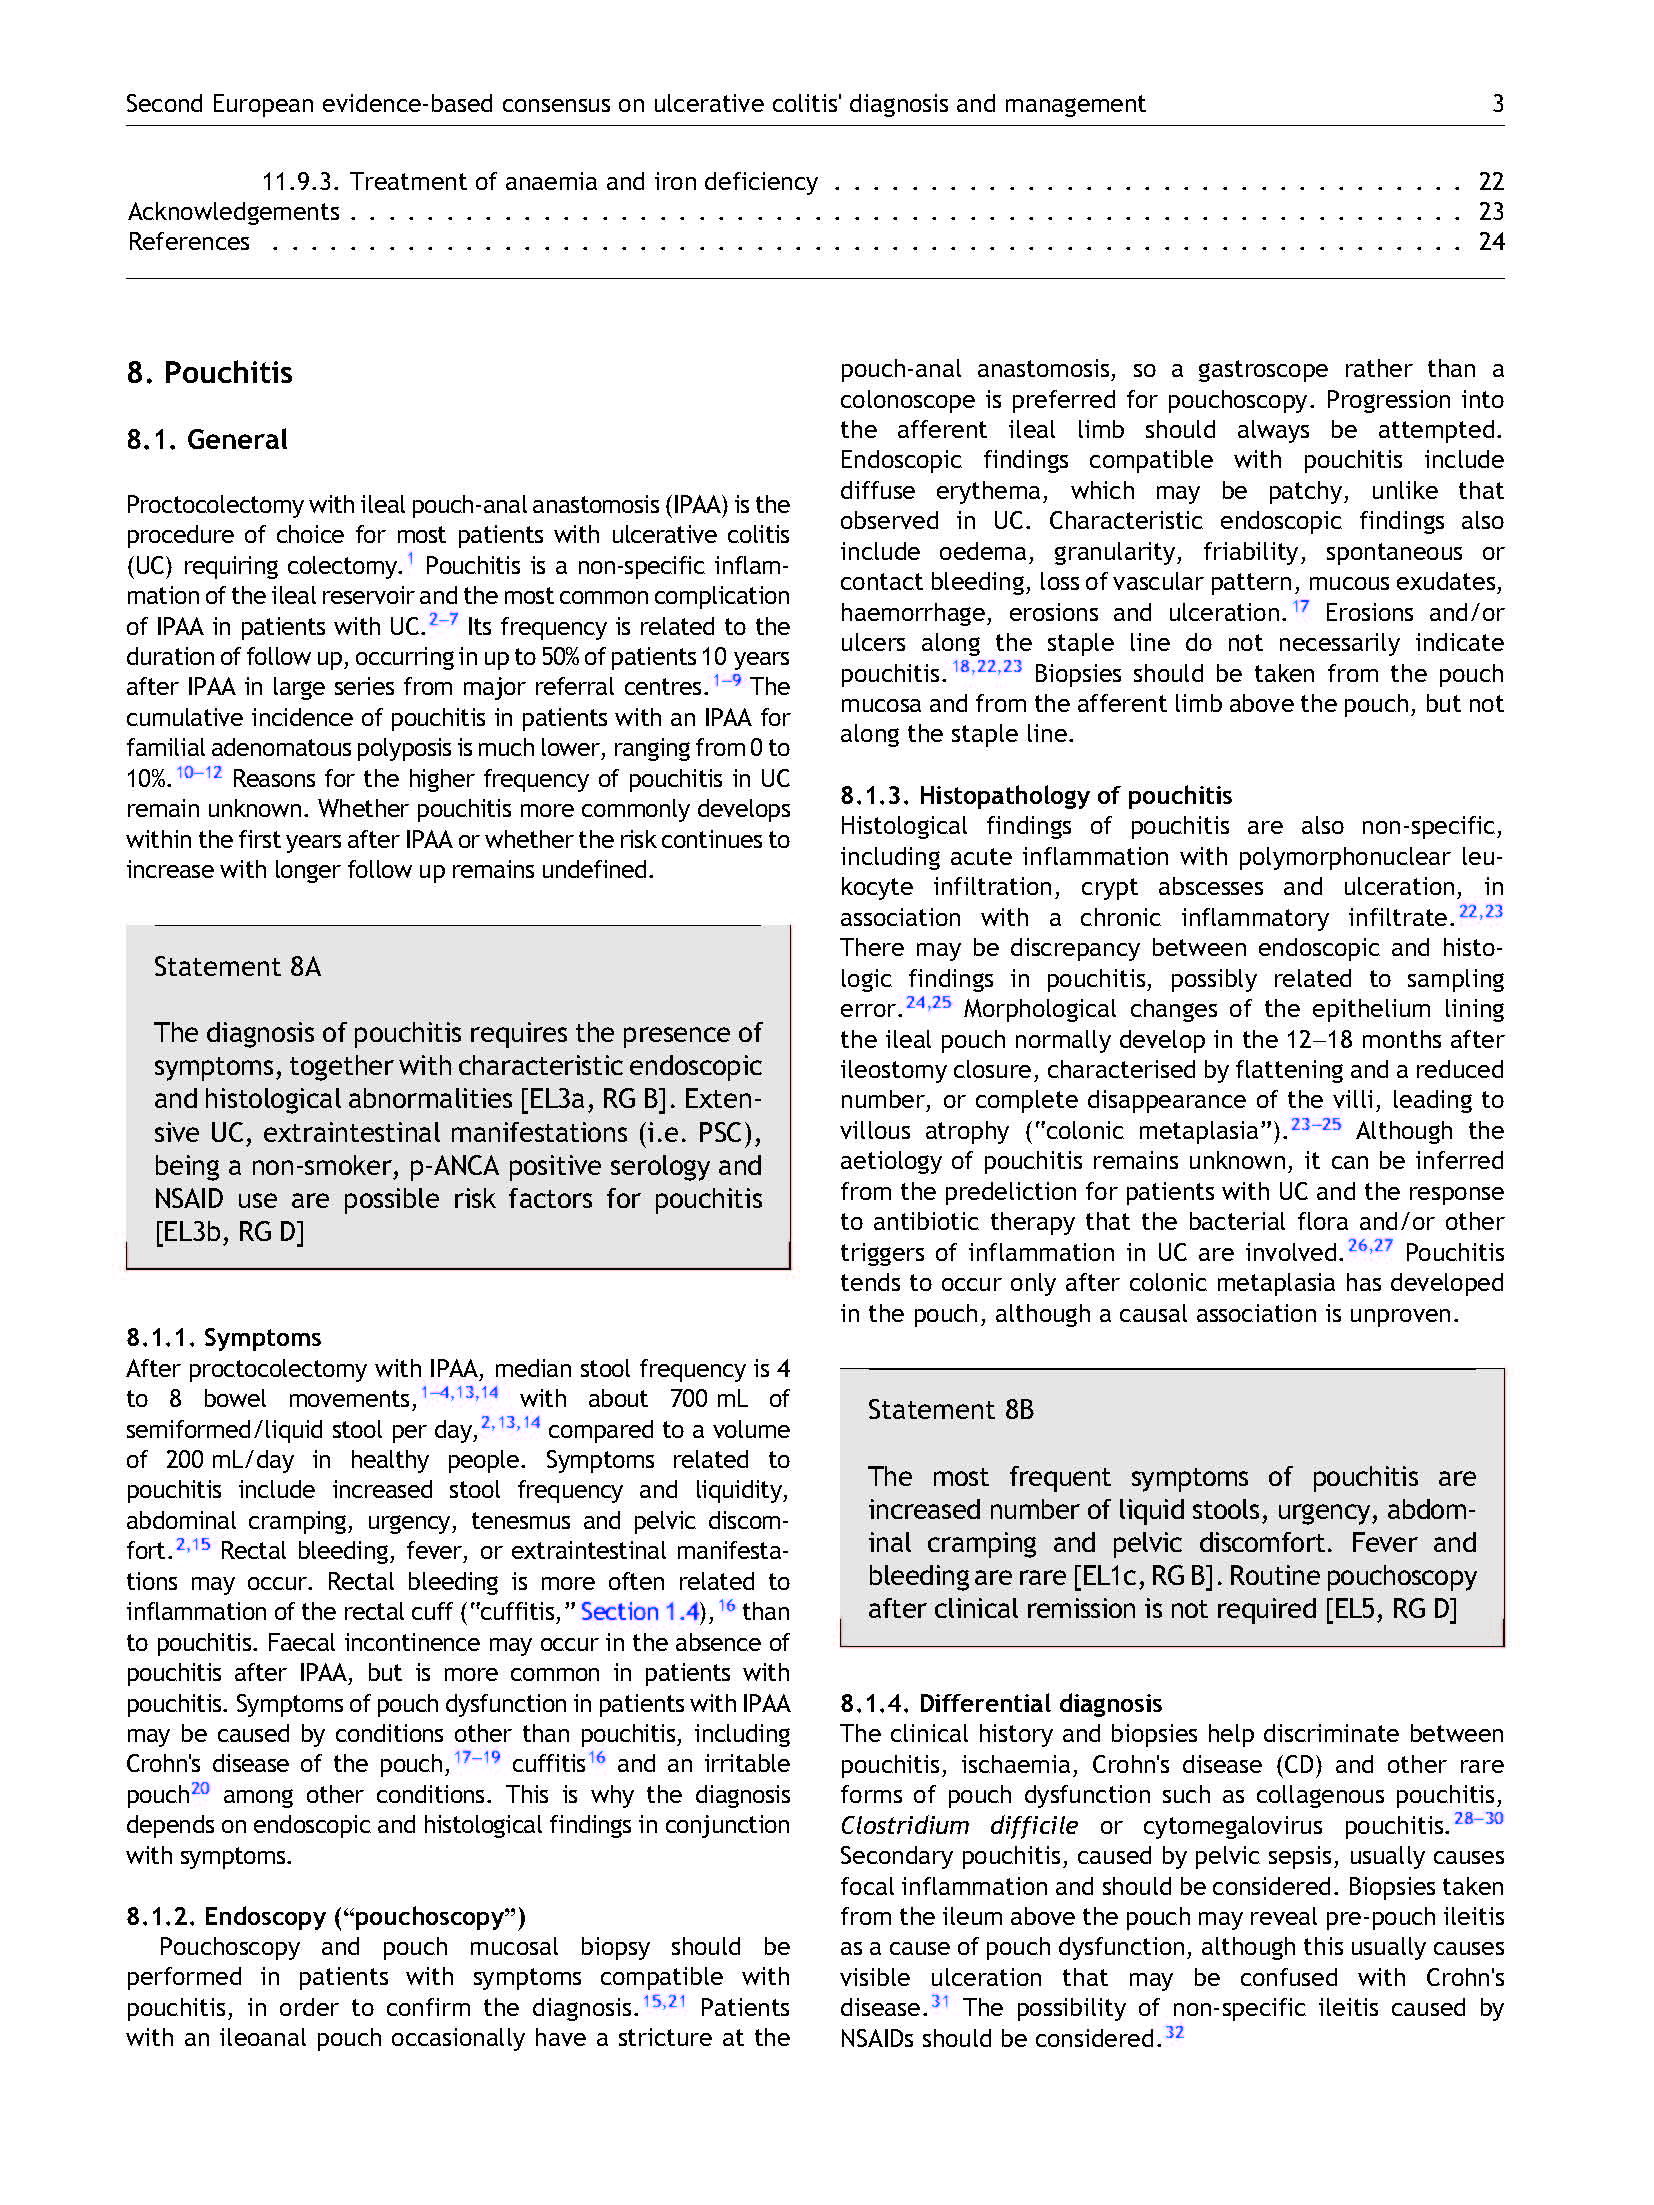 2012-ECCO第二版-欧洲询证共识：溃疡性结肠炎的诊断和处理—特殊情况_页面_03.jpg